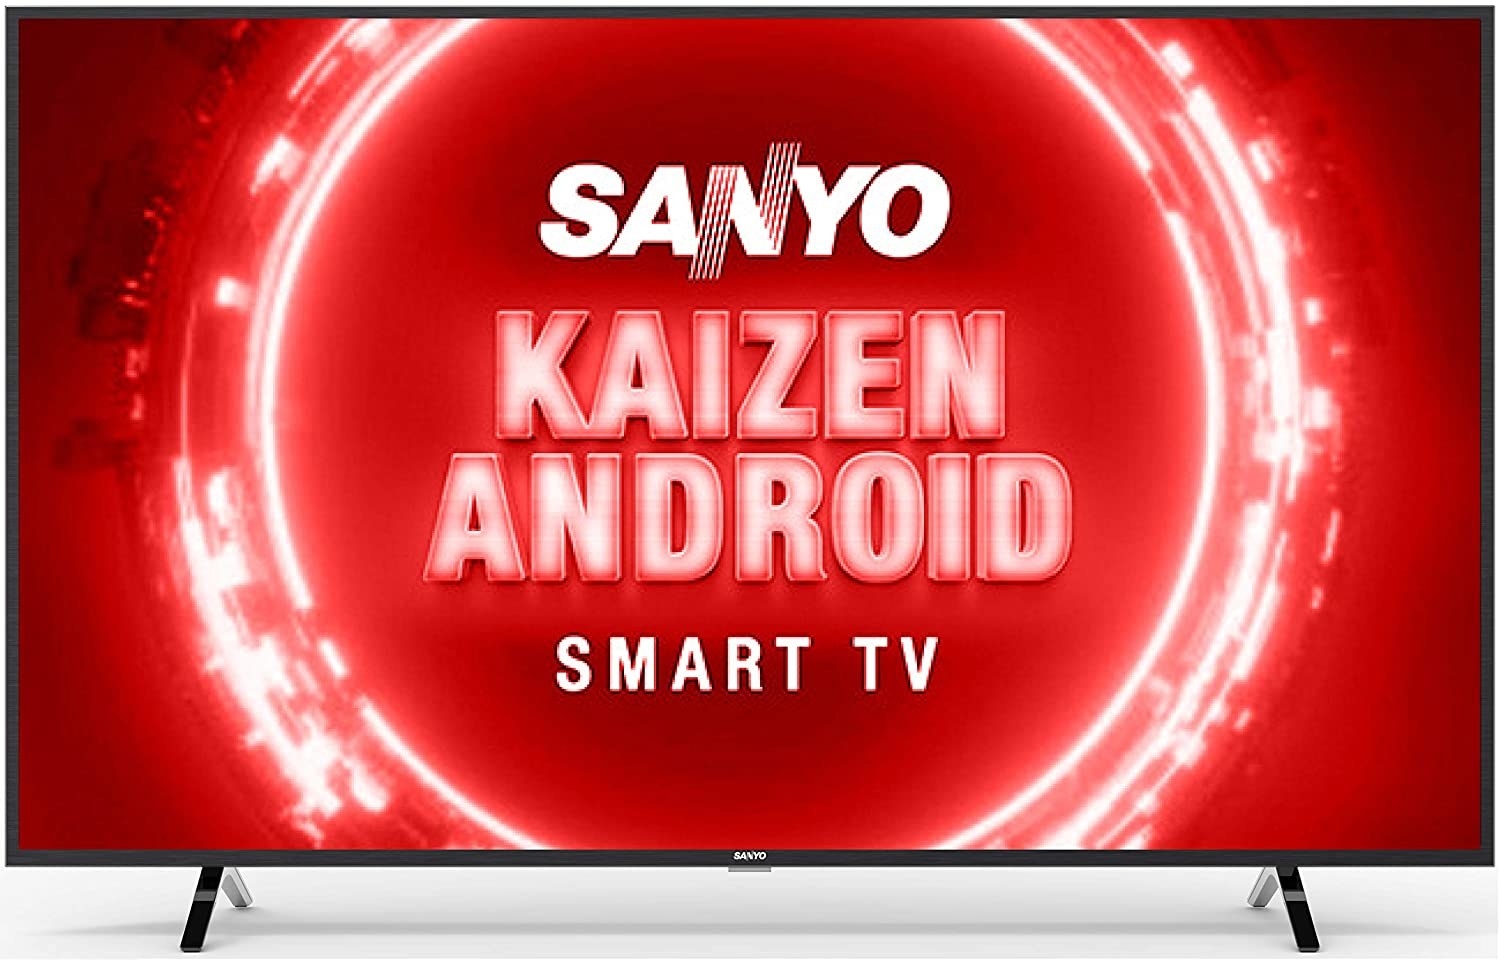 Sanyo TV